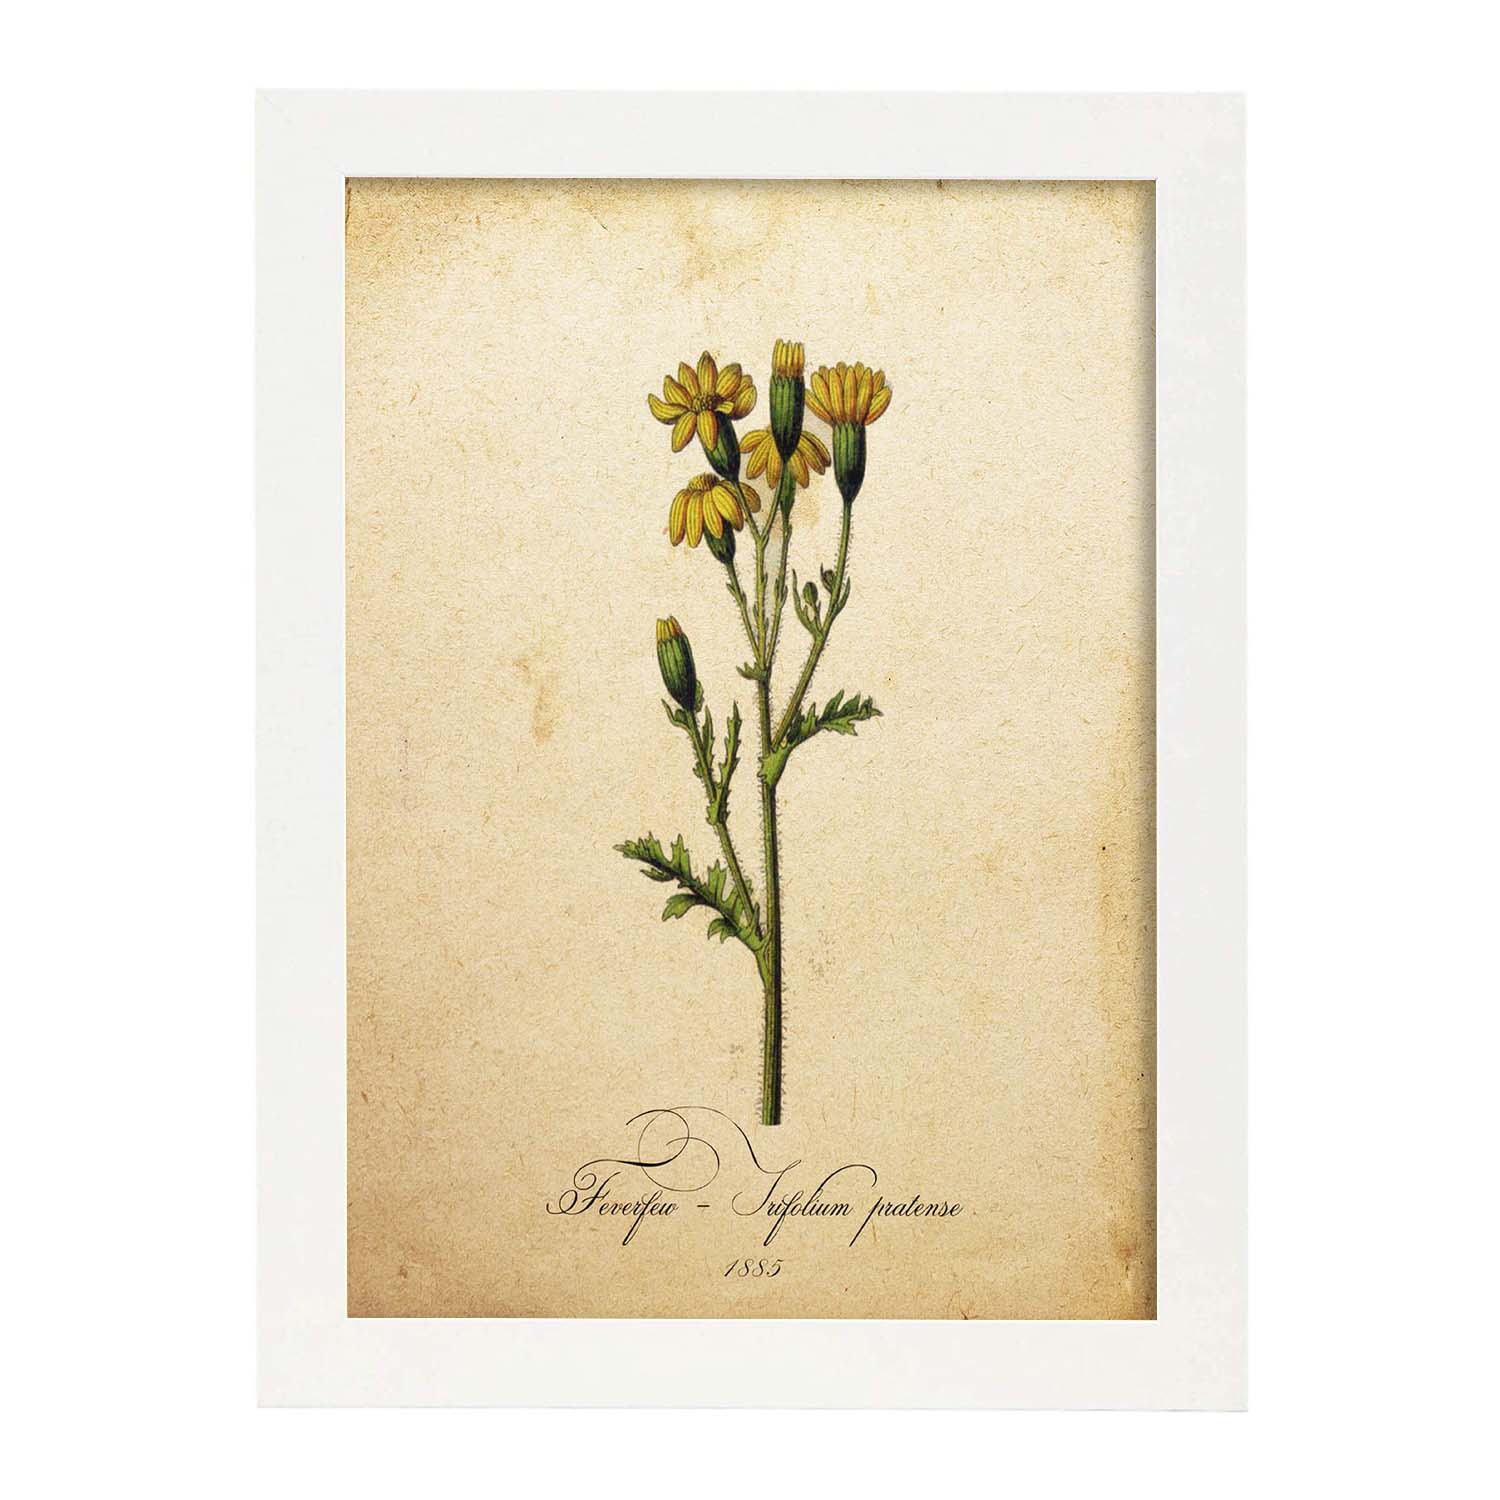 Poster de flores vintage. Lámina Trifolium pratense con diseño vintage.-Artwork-Nacnic-A3-Marco Blanco-Nacnic Estudio SL